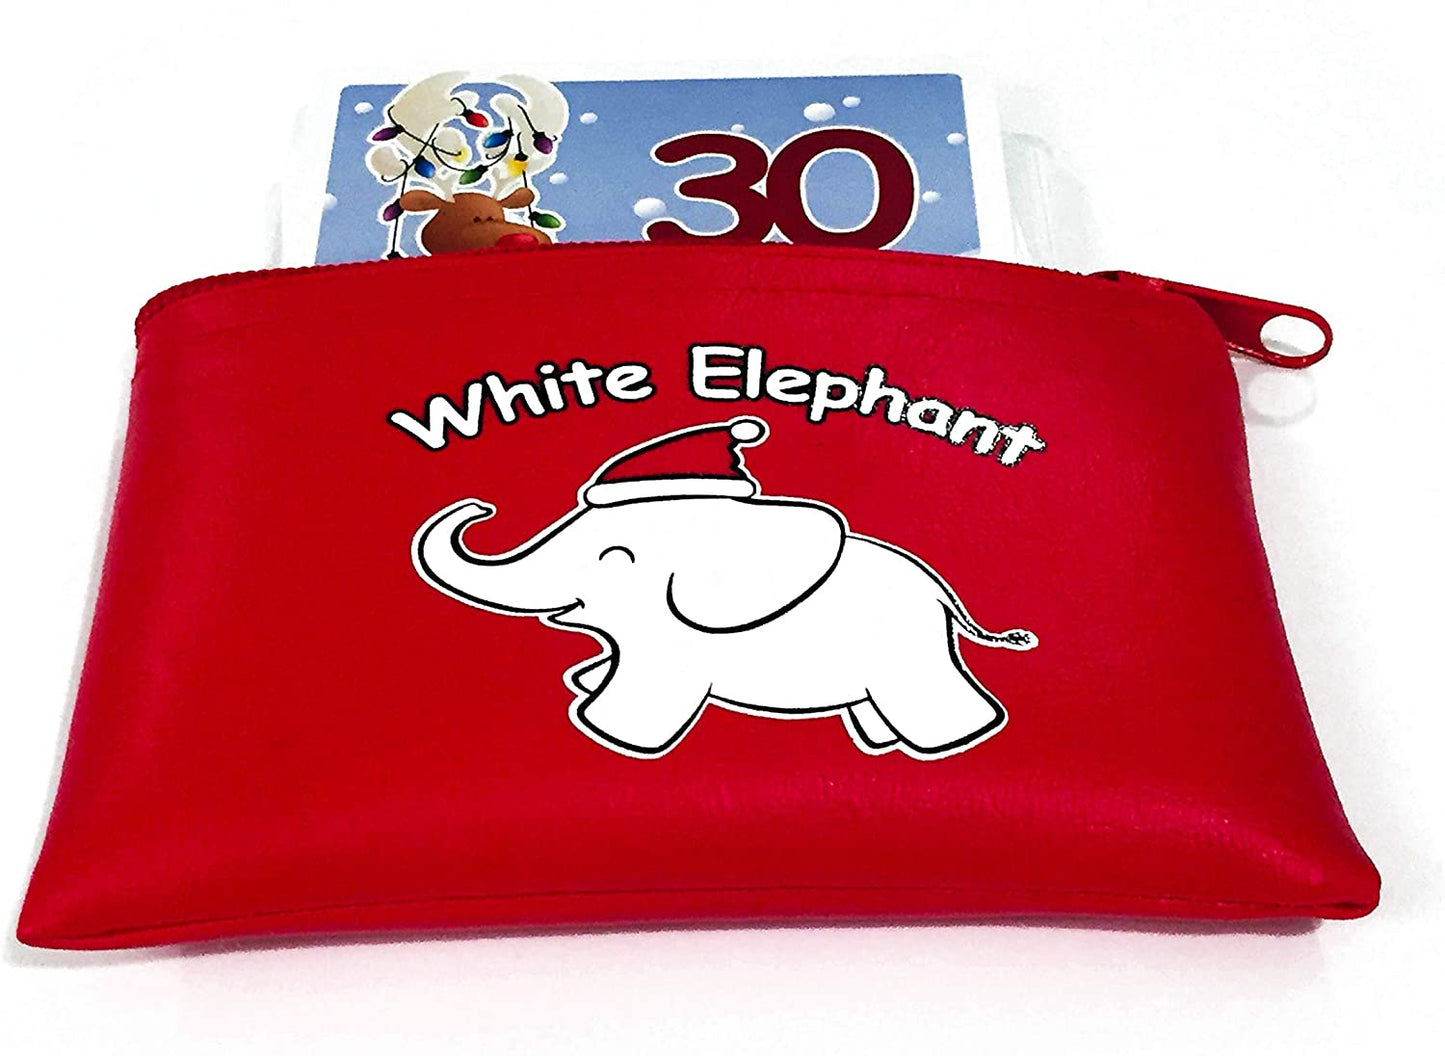 White Elephant Gift Exchange Card Set